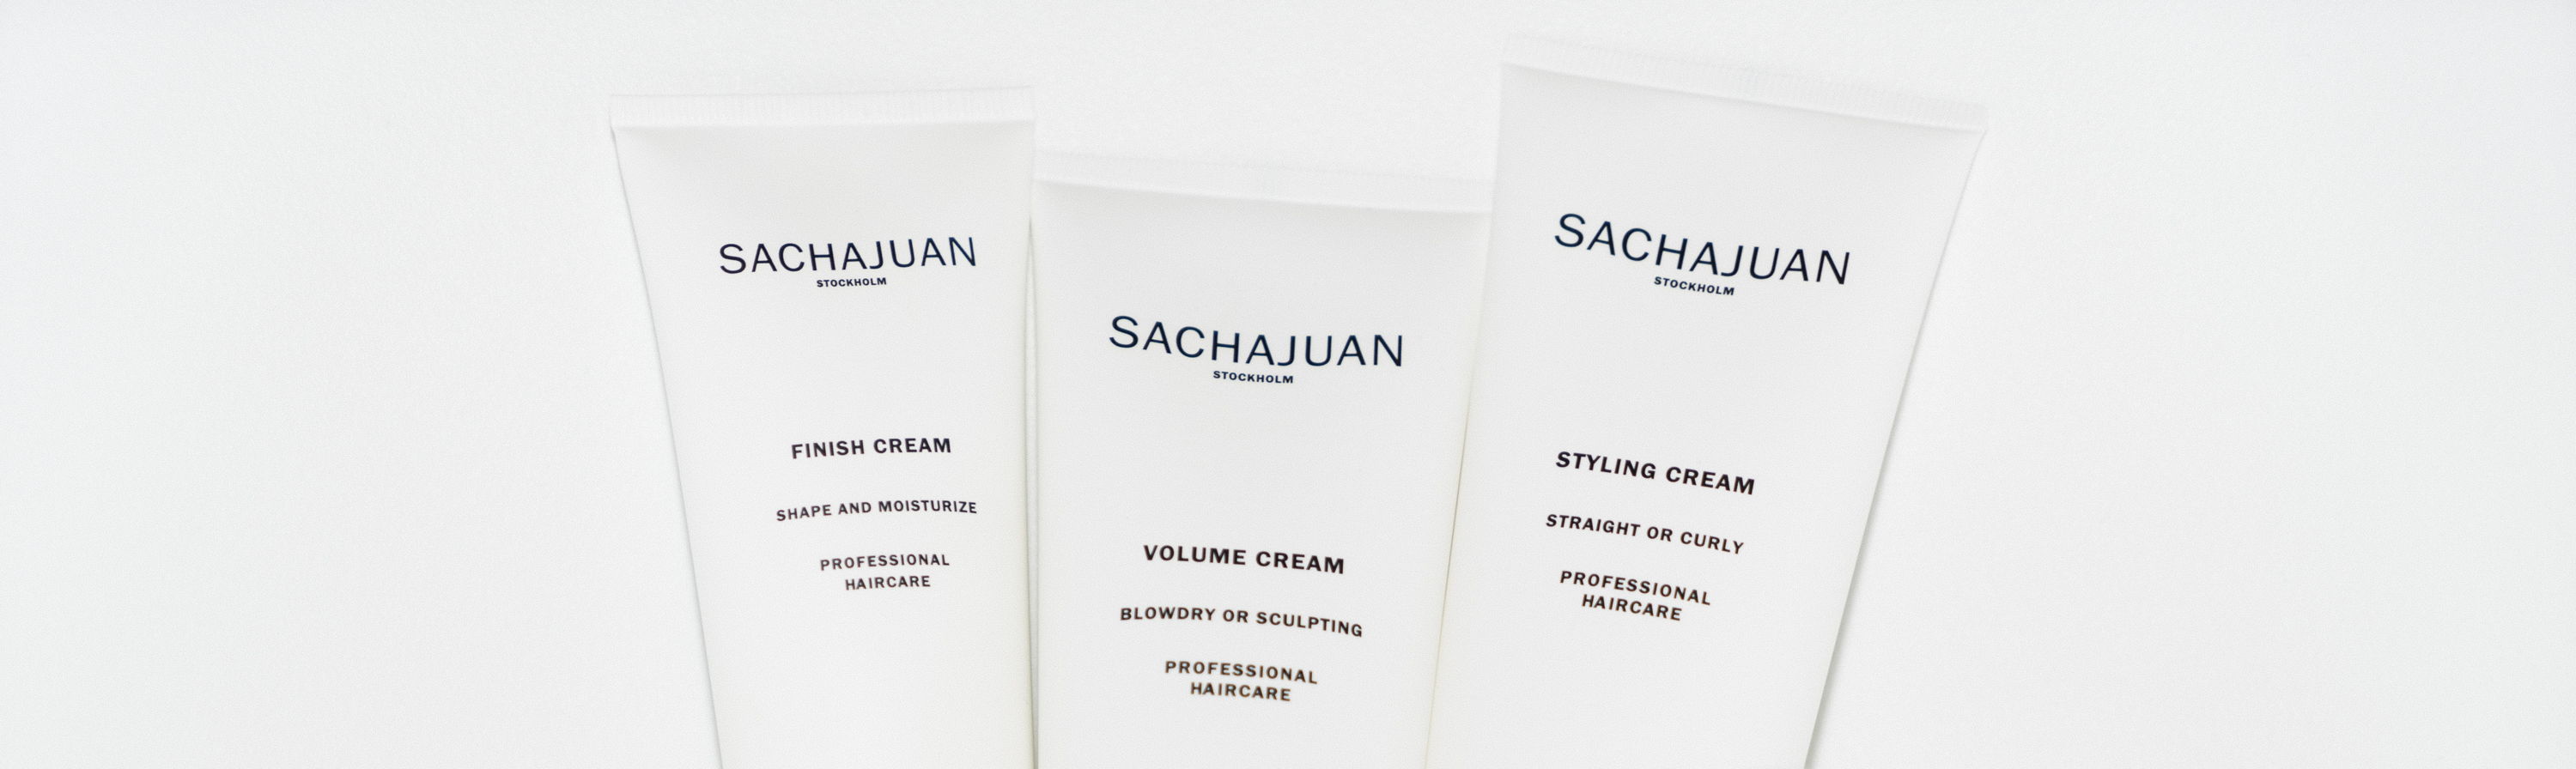 Sachajuan products, finish cream, volume cream, styling cream